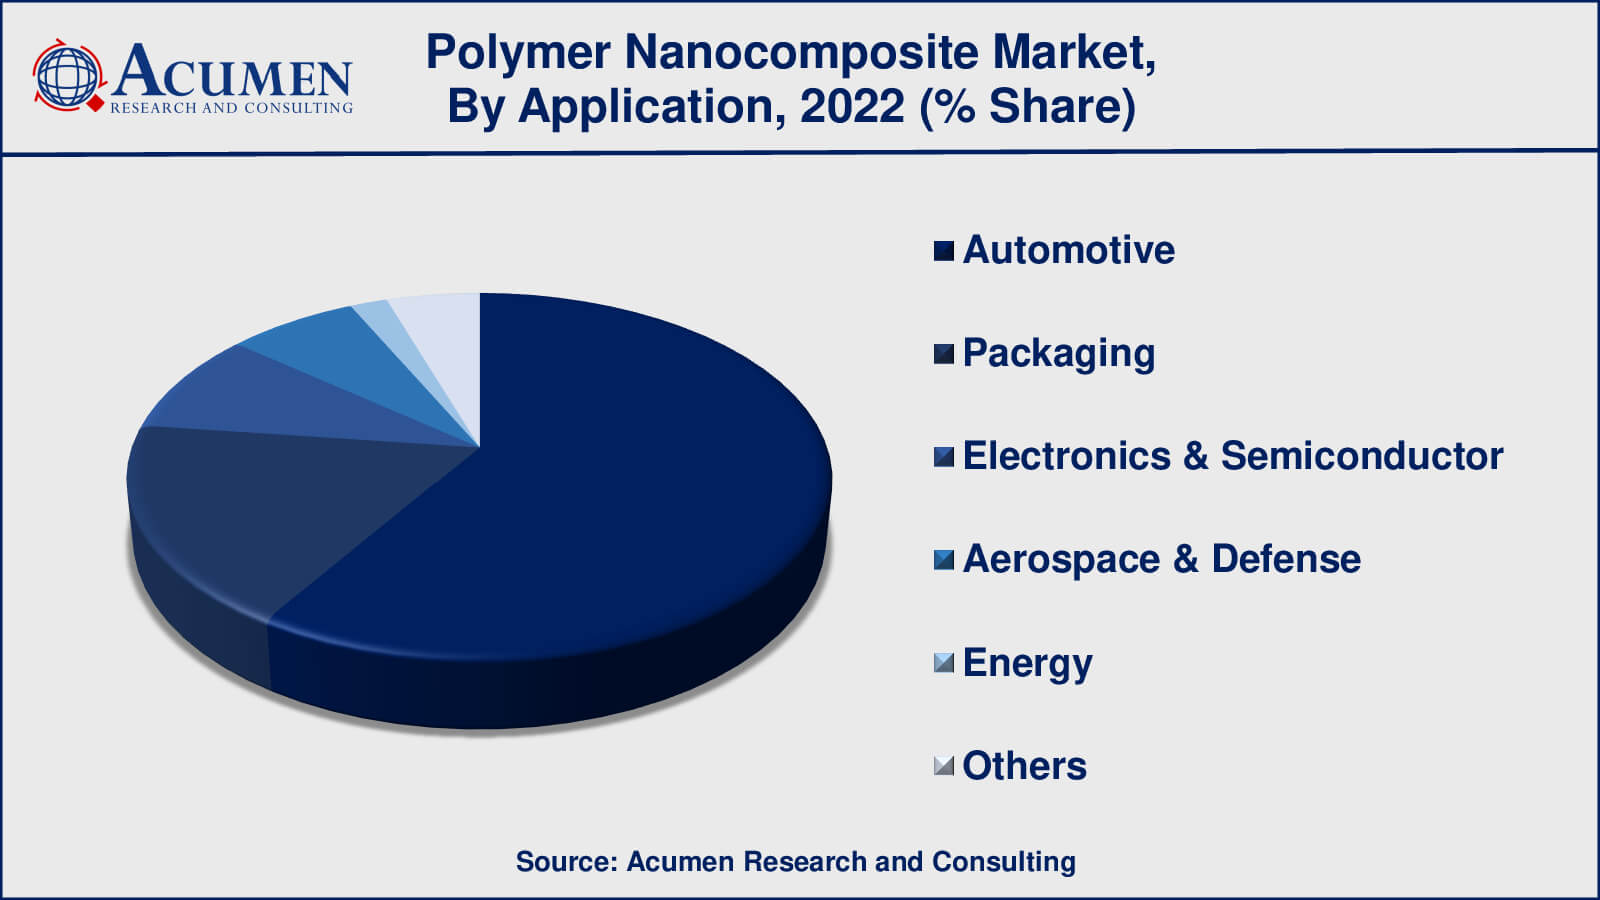 Polymer Nanocomposite Market Drivers